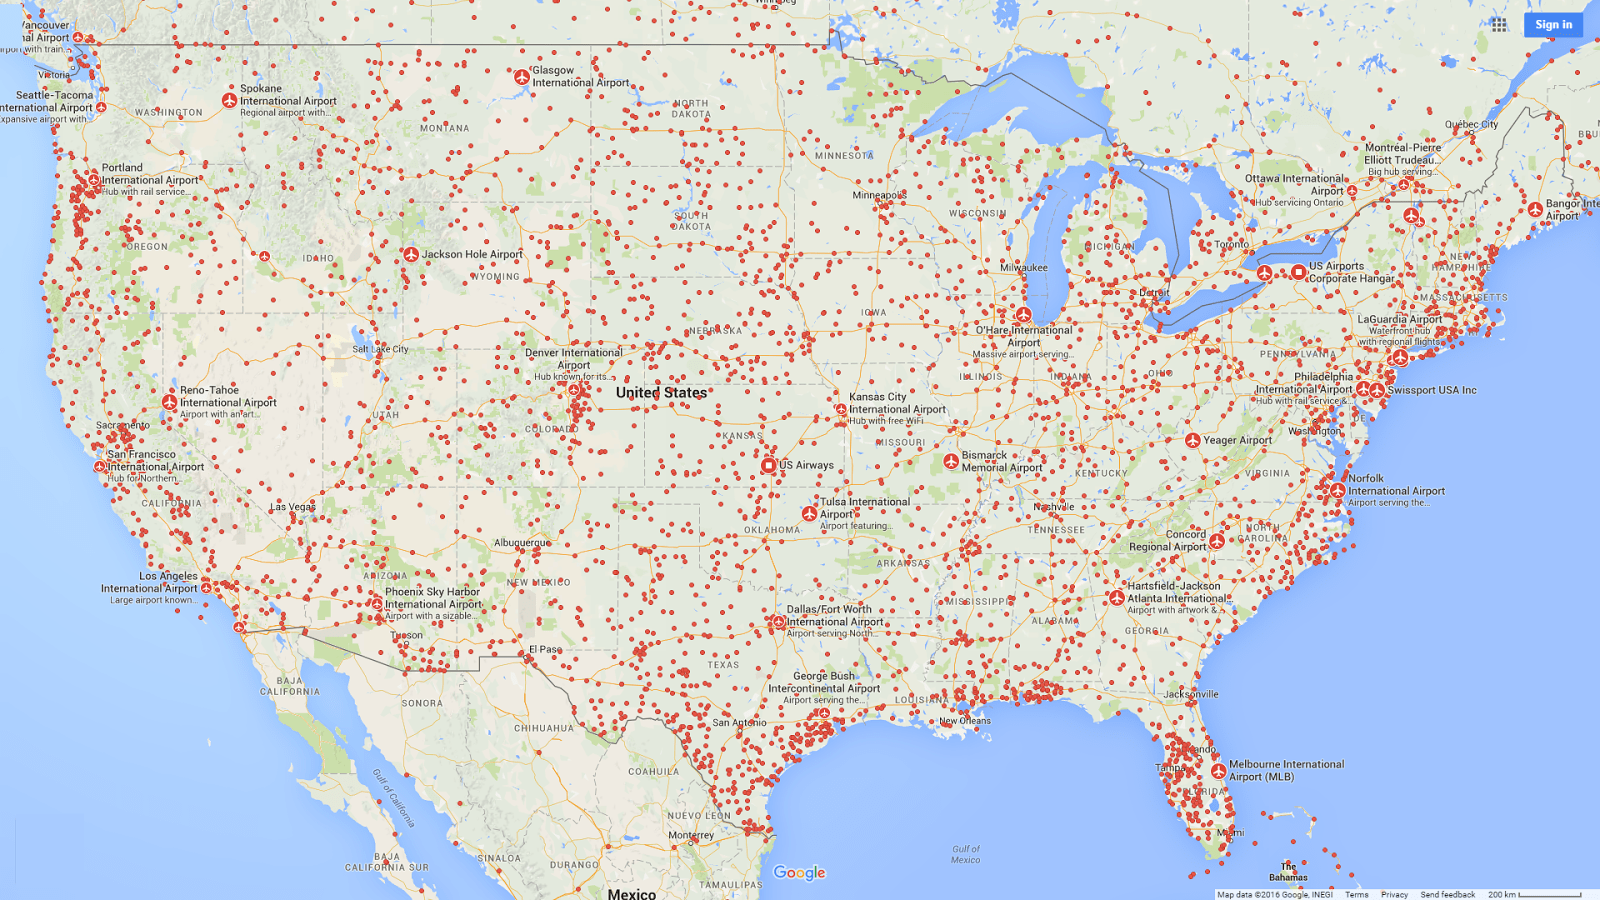 U.S International Airport Map